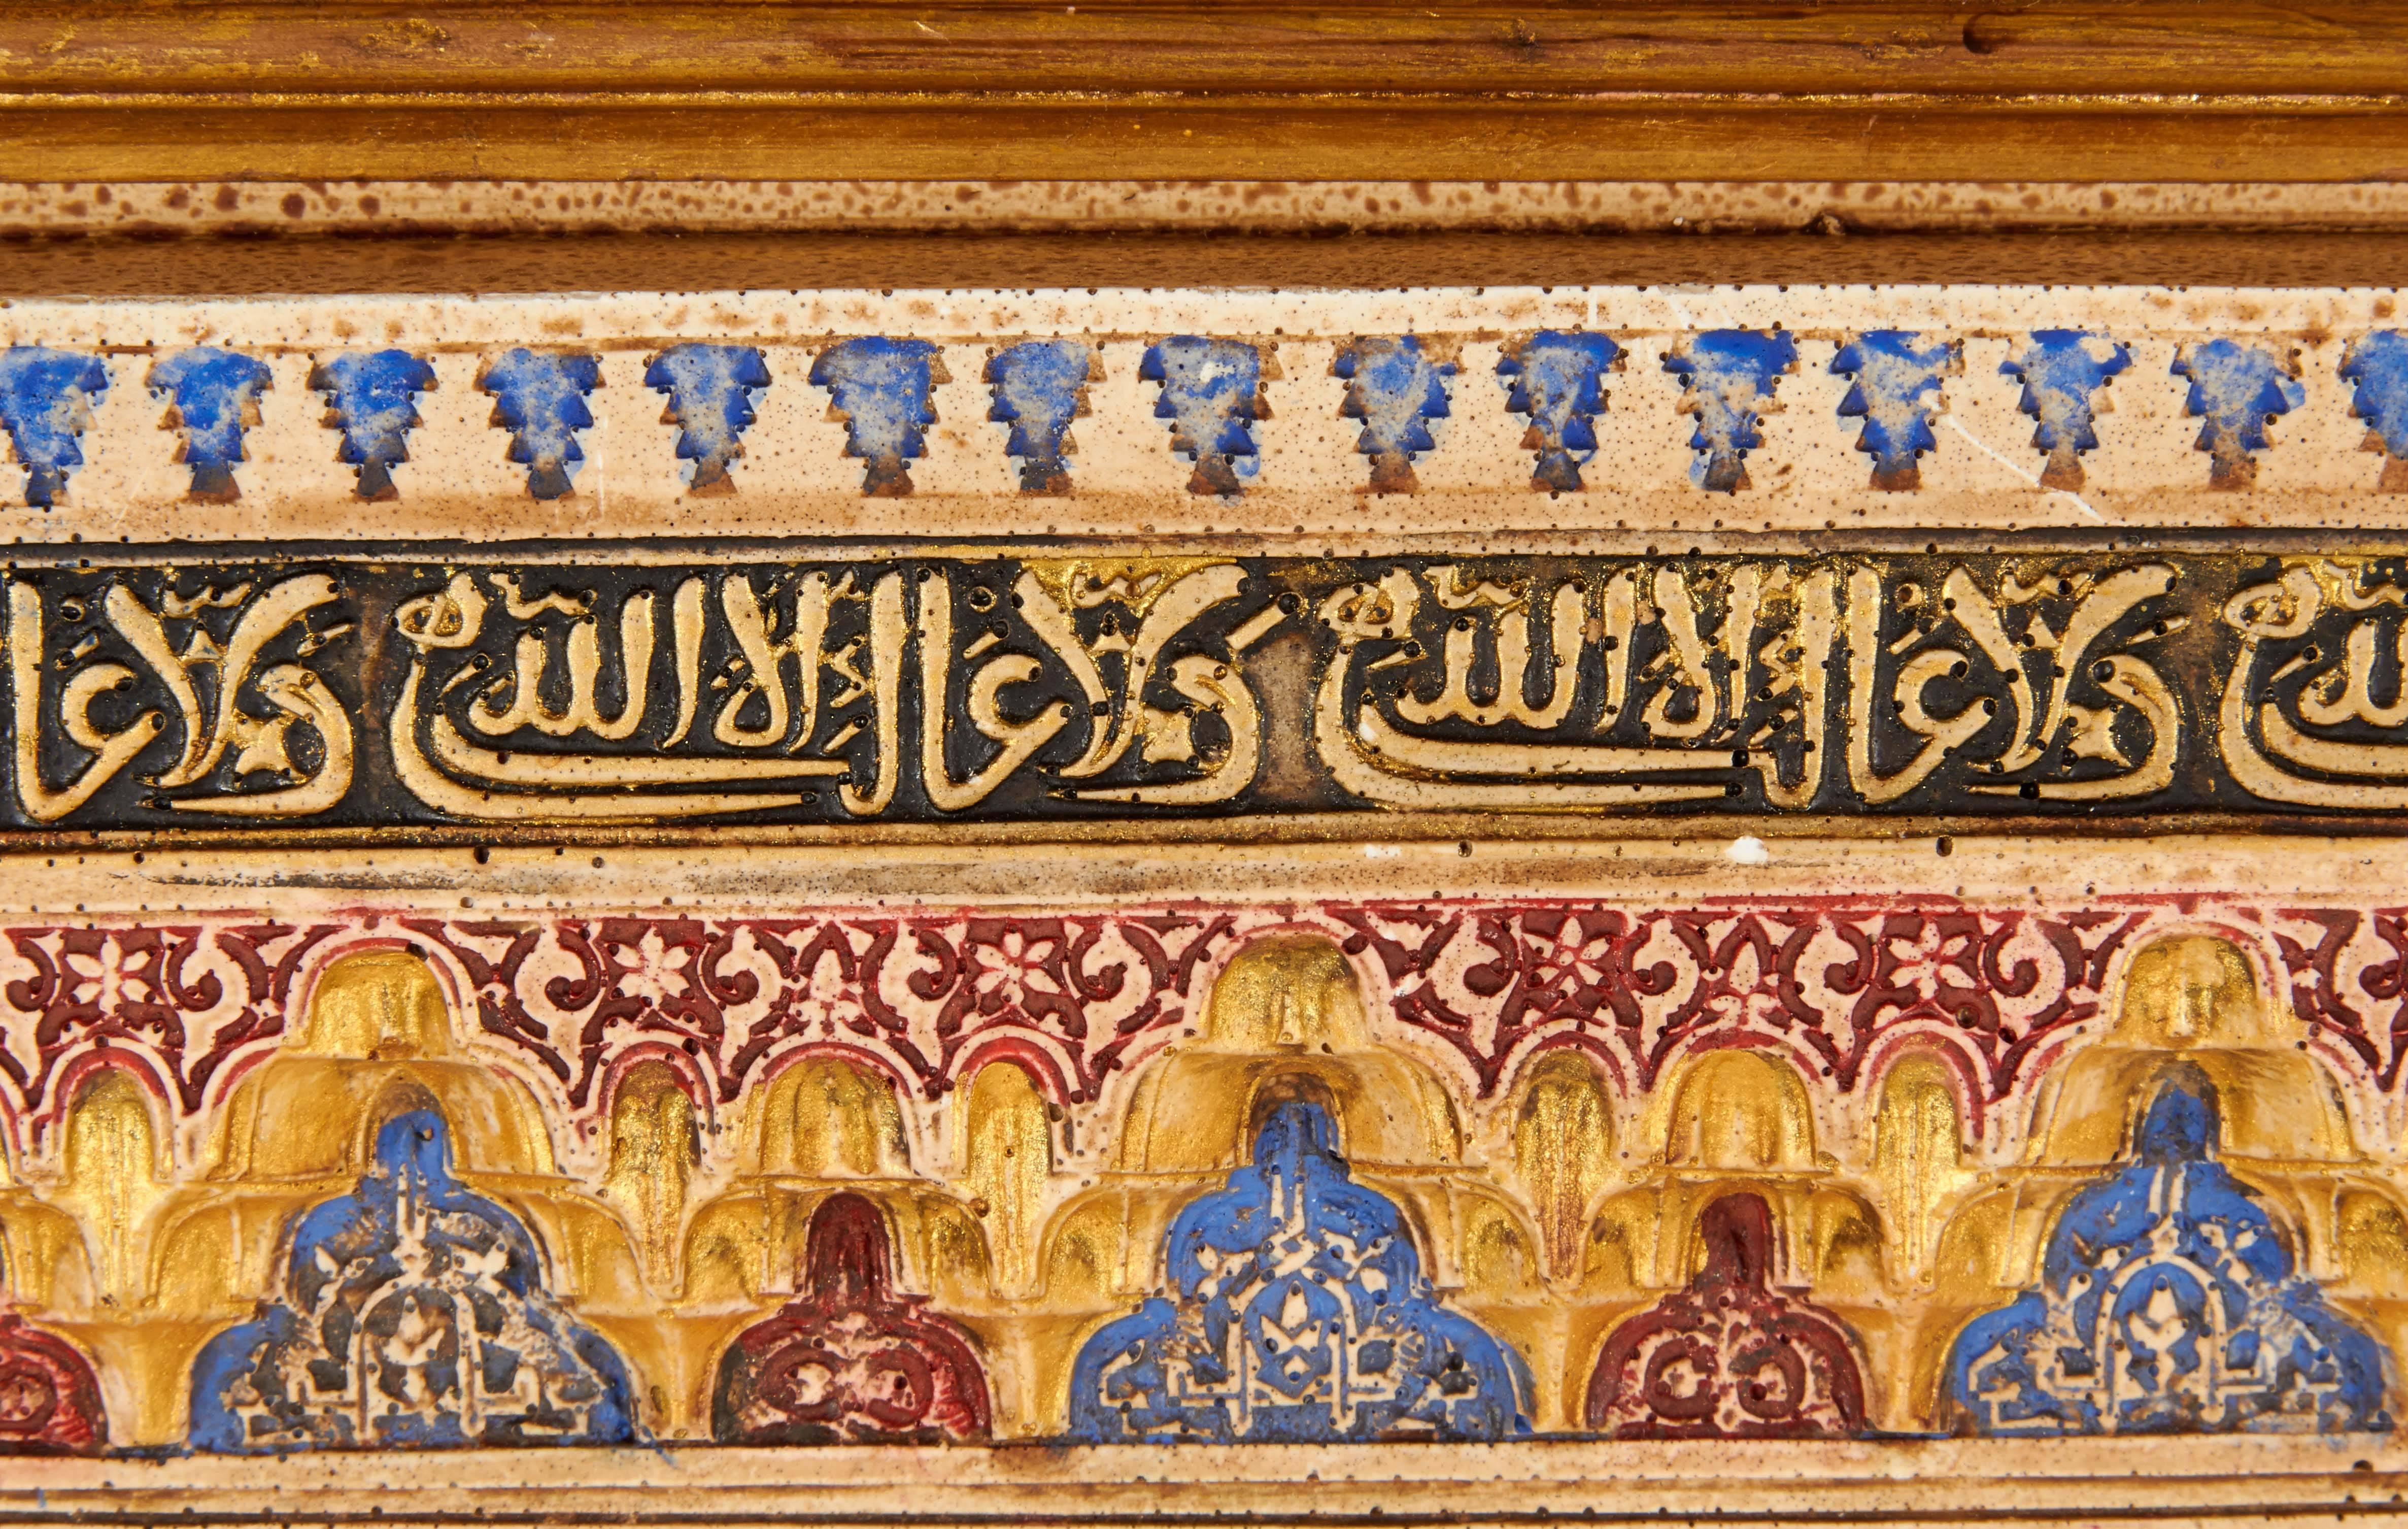 Paint Spanish Plaster Wall Plaque Depicting the Alhambra Moorish Islamic Taste